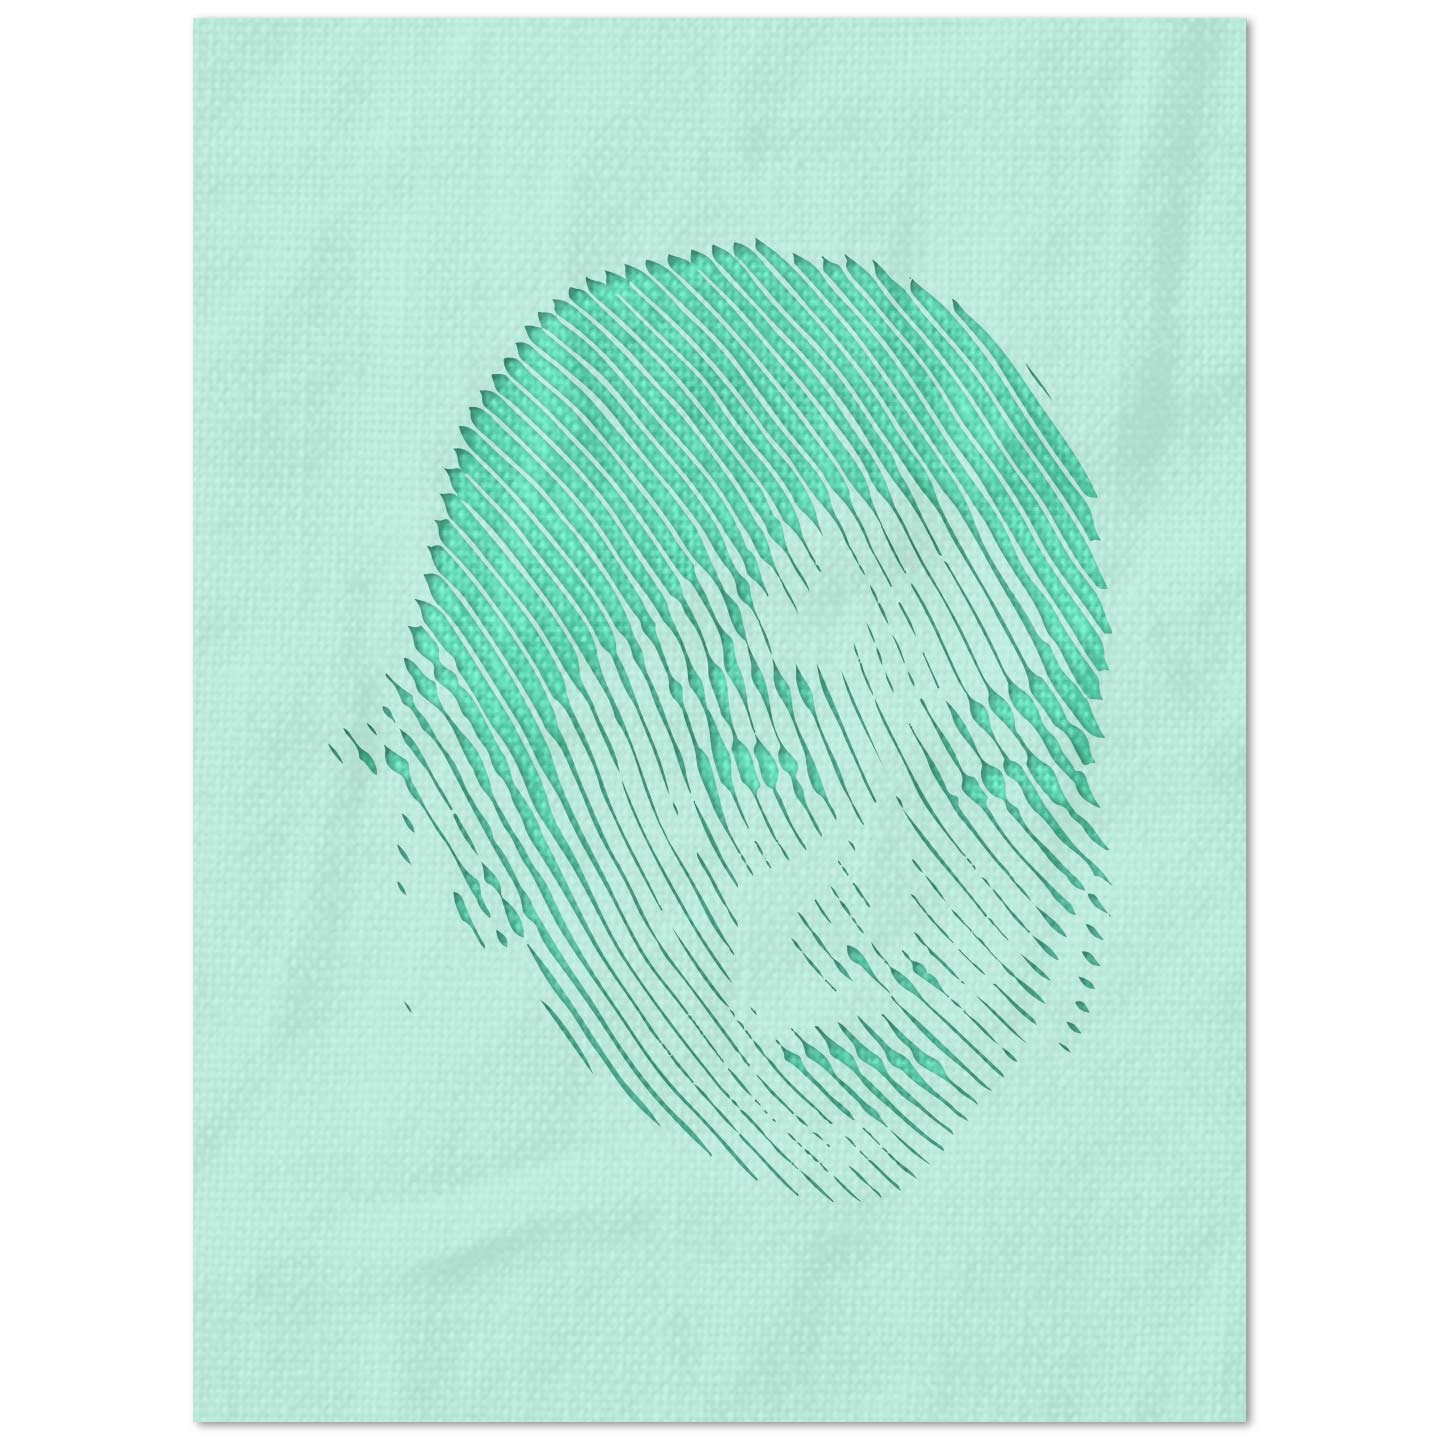 Jung Ho-Yeon halftone face stencil